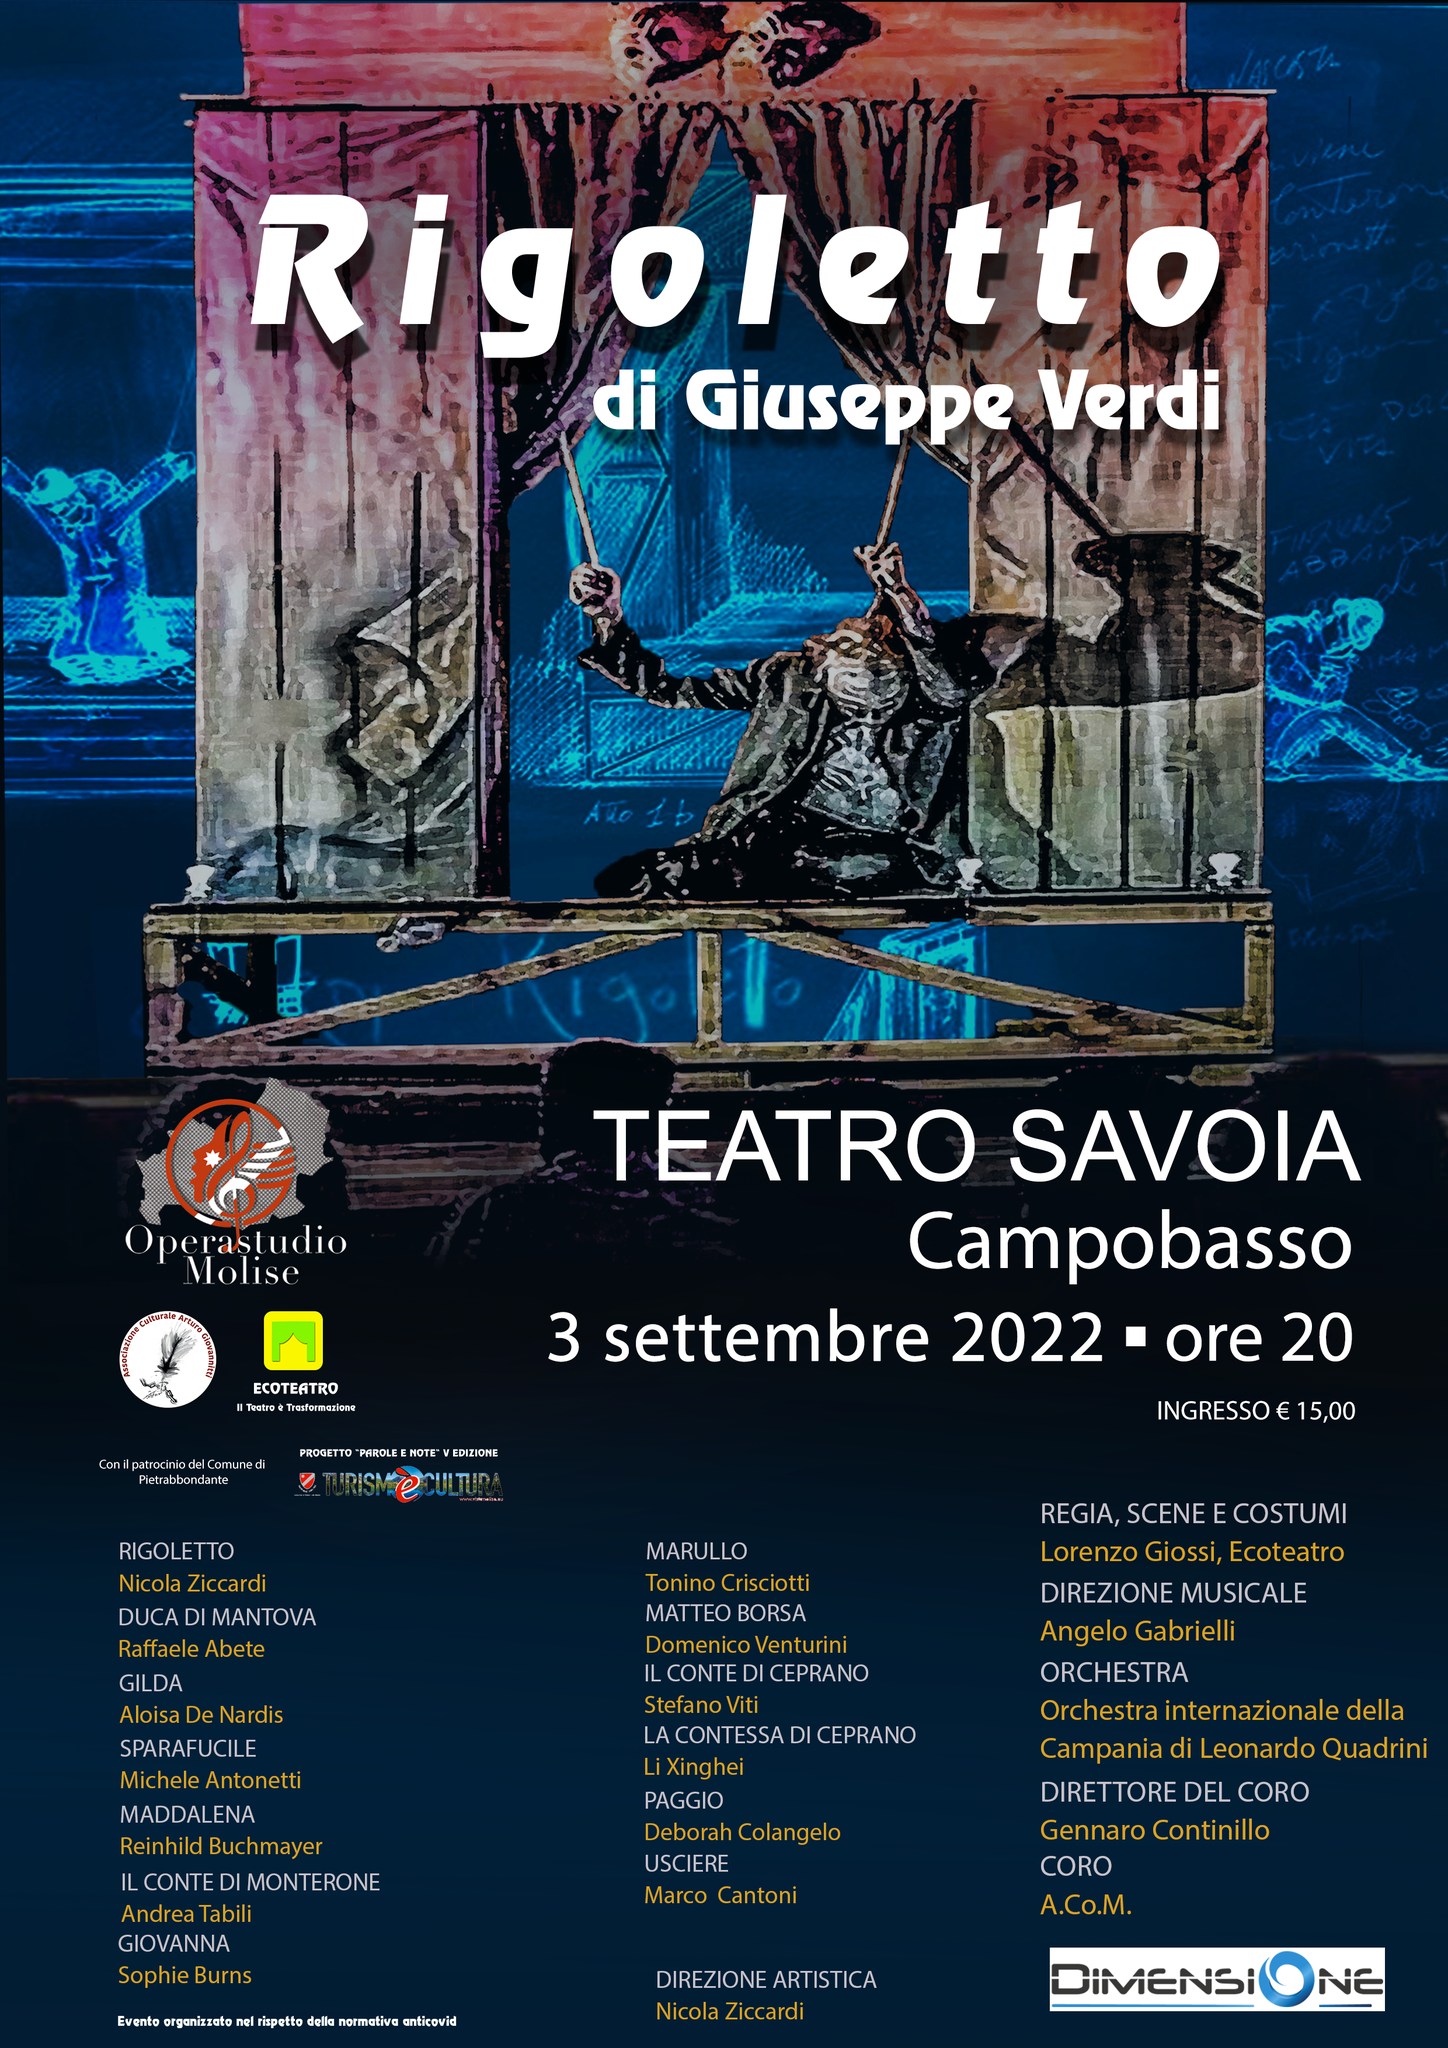 Rigoletto - OperaStudio Molise